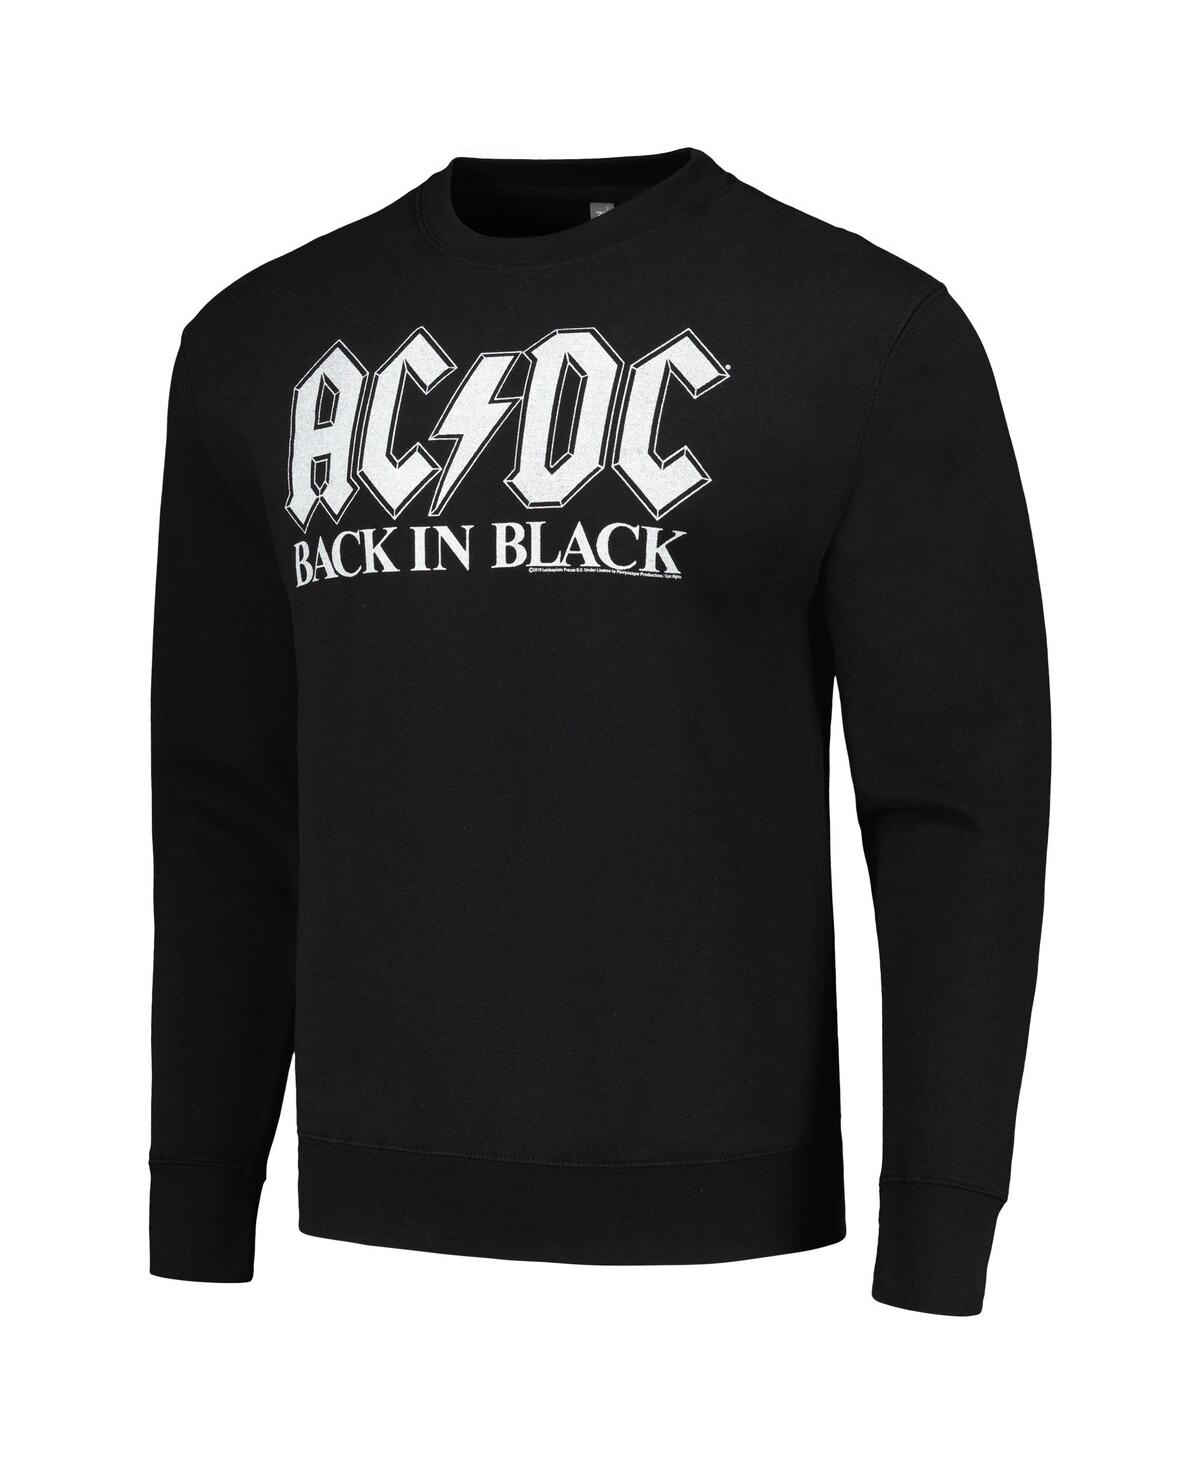 Shop American Classics Men's Black Acdc Back In Black Pullover Sweatshirt